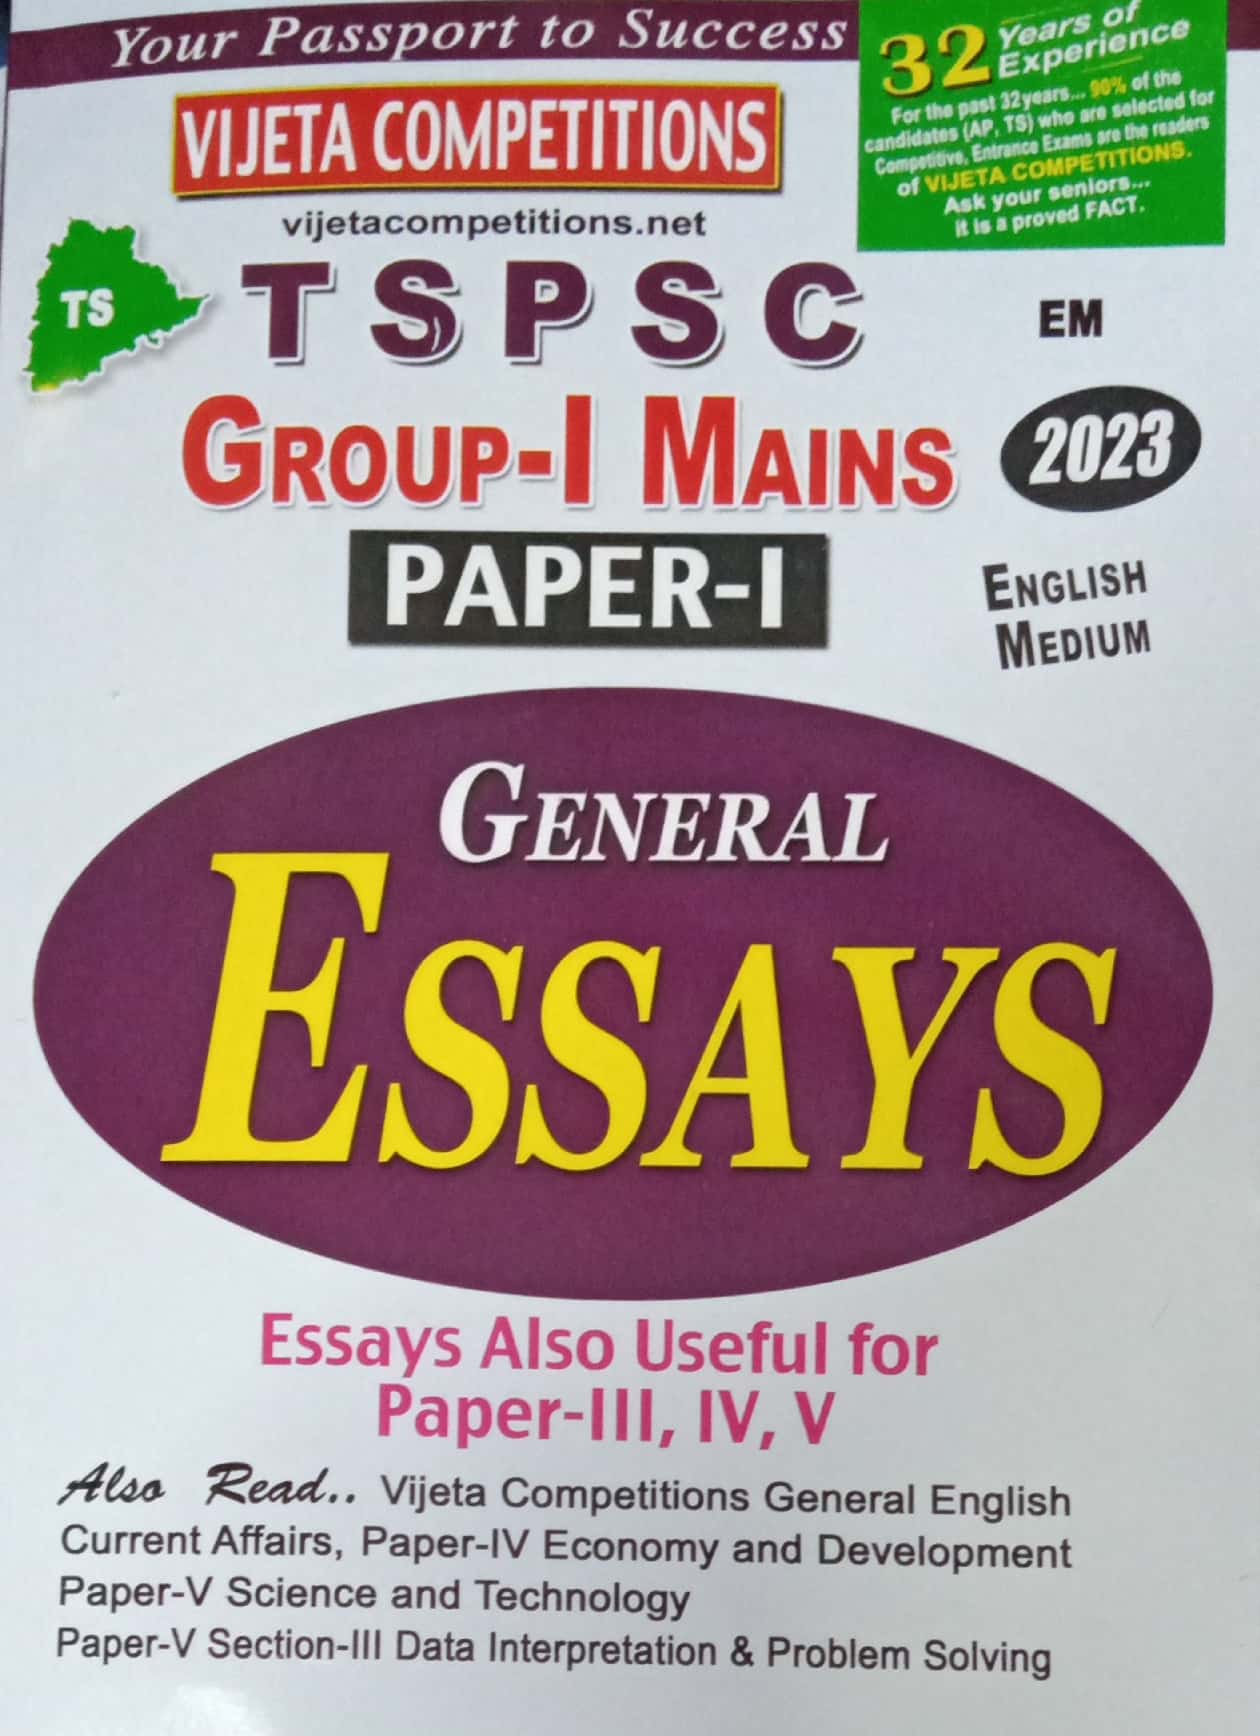 TSPSC Group-1 Mains Paper-1 General Essays [English Medium]FEB 2023 ED Vijetha